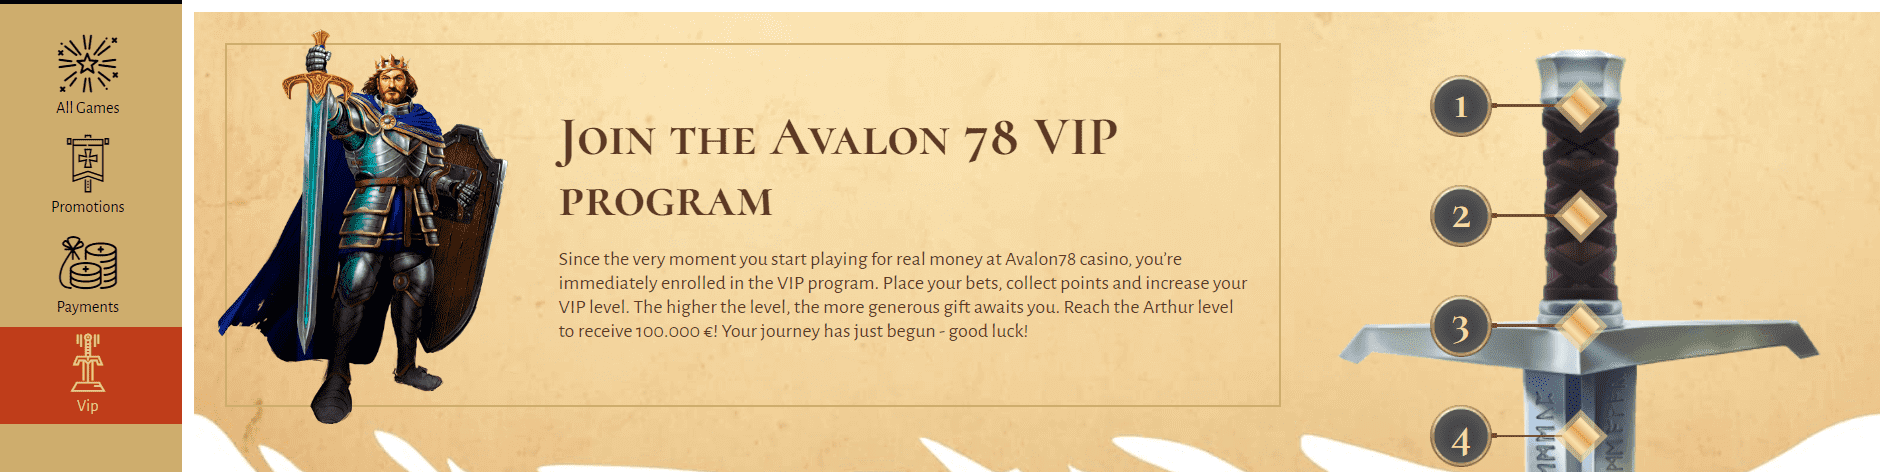 Avalon78 Casino VIP Program 1